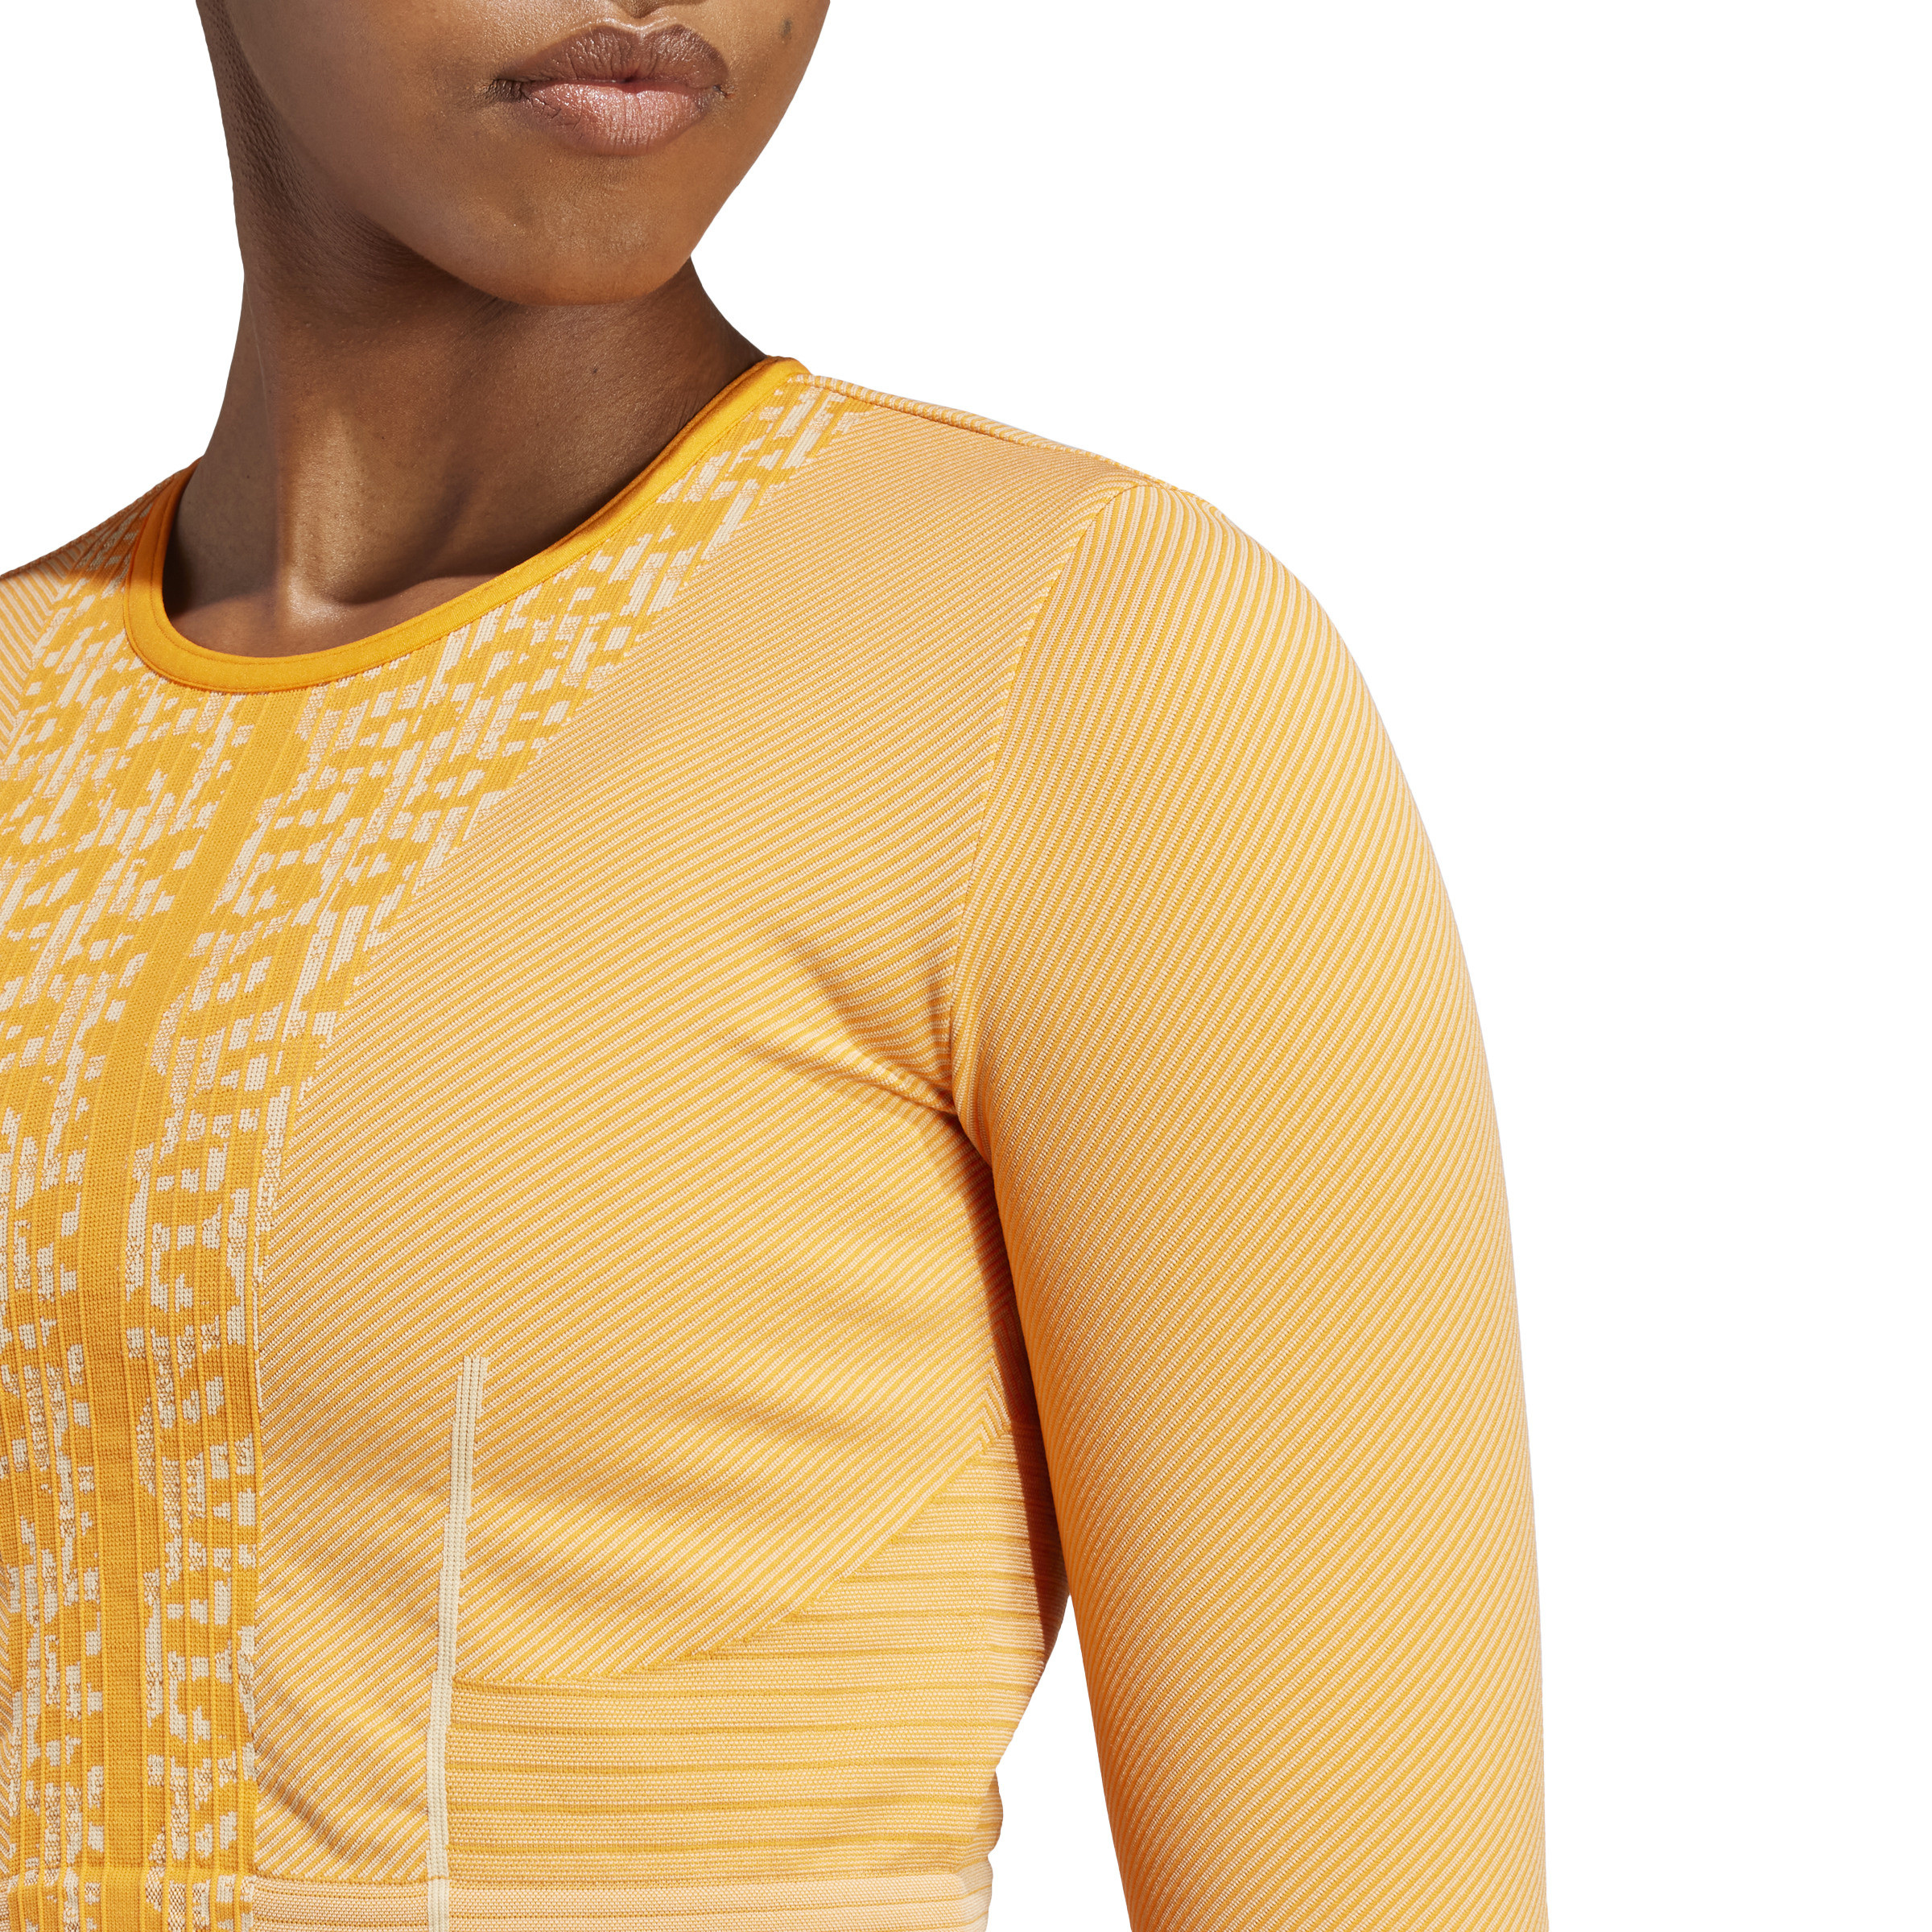 Adidas by Stella McCartney - TrueStrength Seamless Long Sleeve Yoga Top, Orange, large image number 6